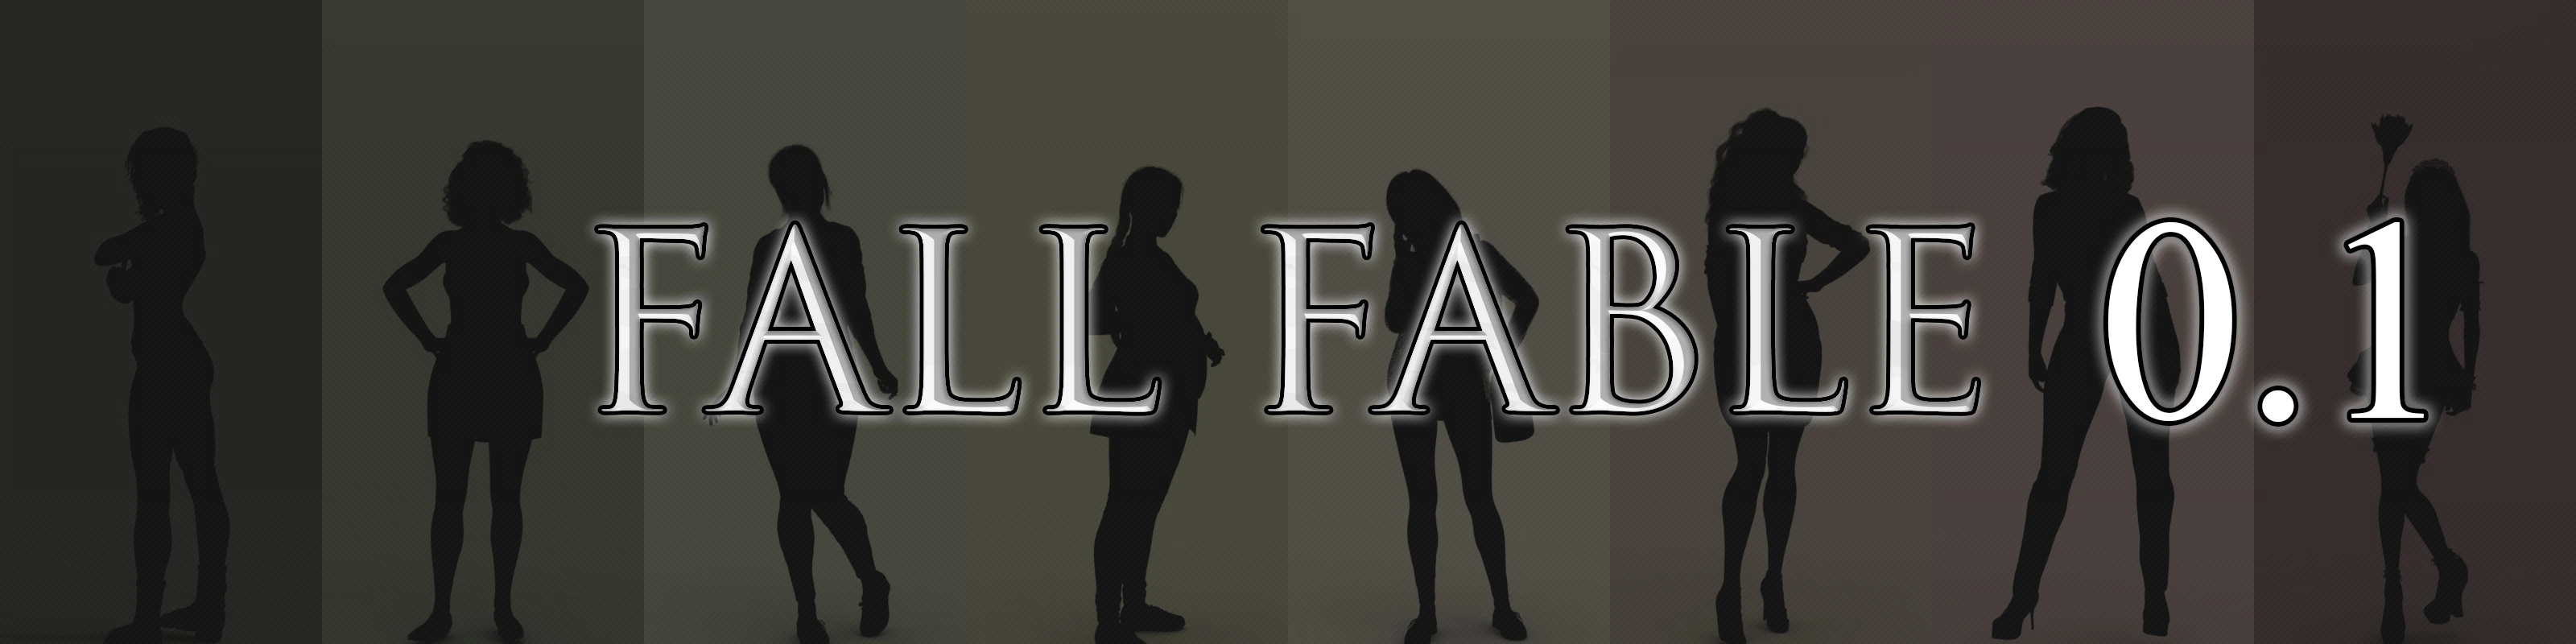 Fall Fable [v0.2] main image